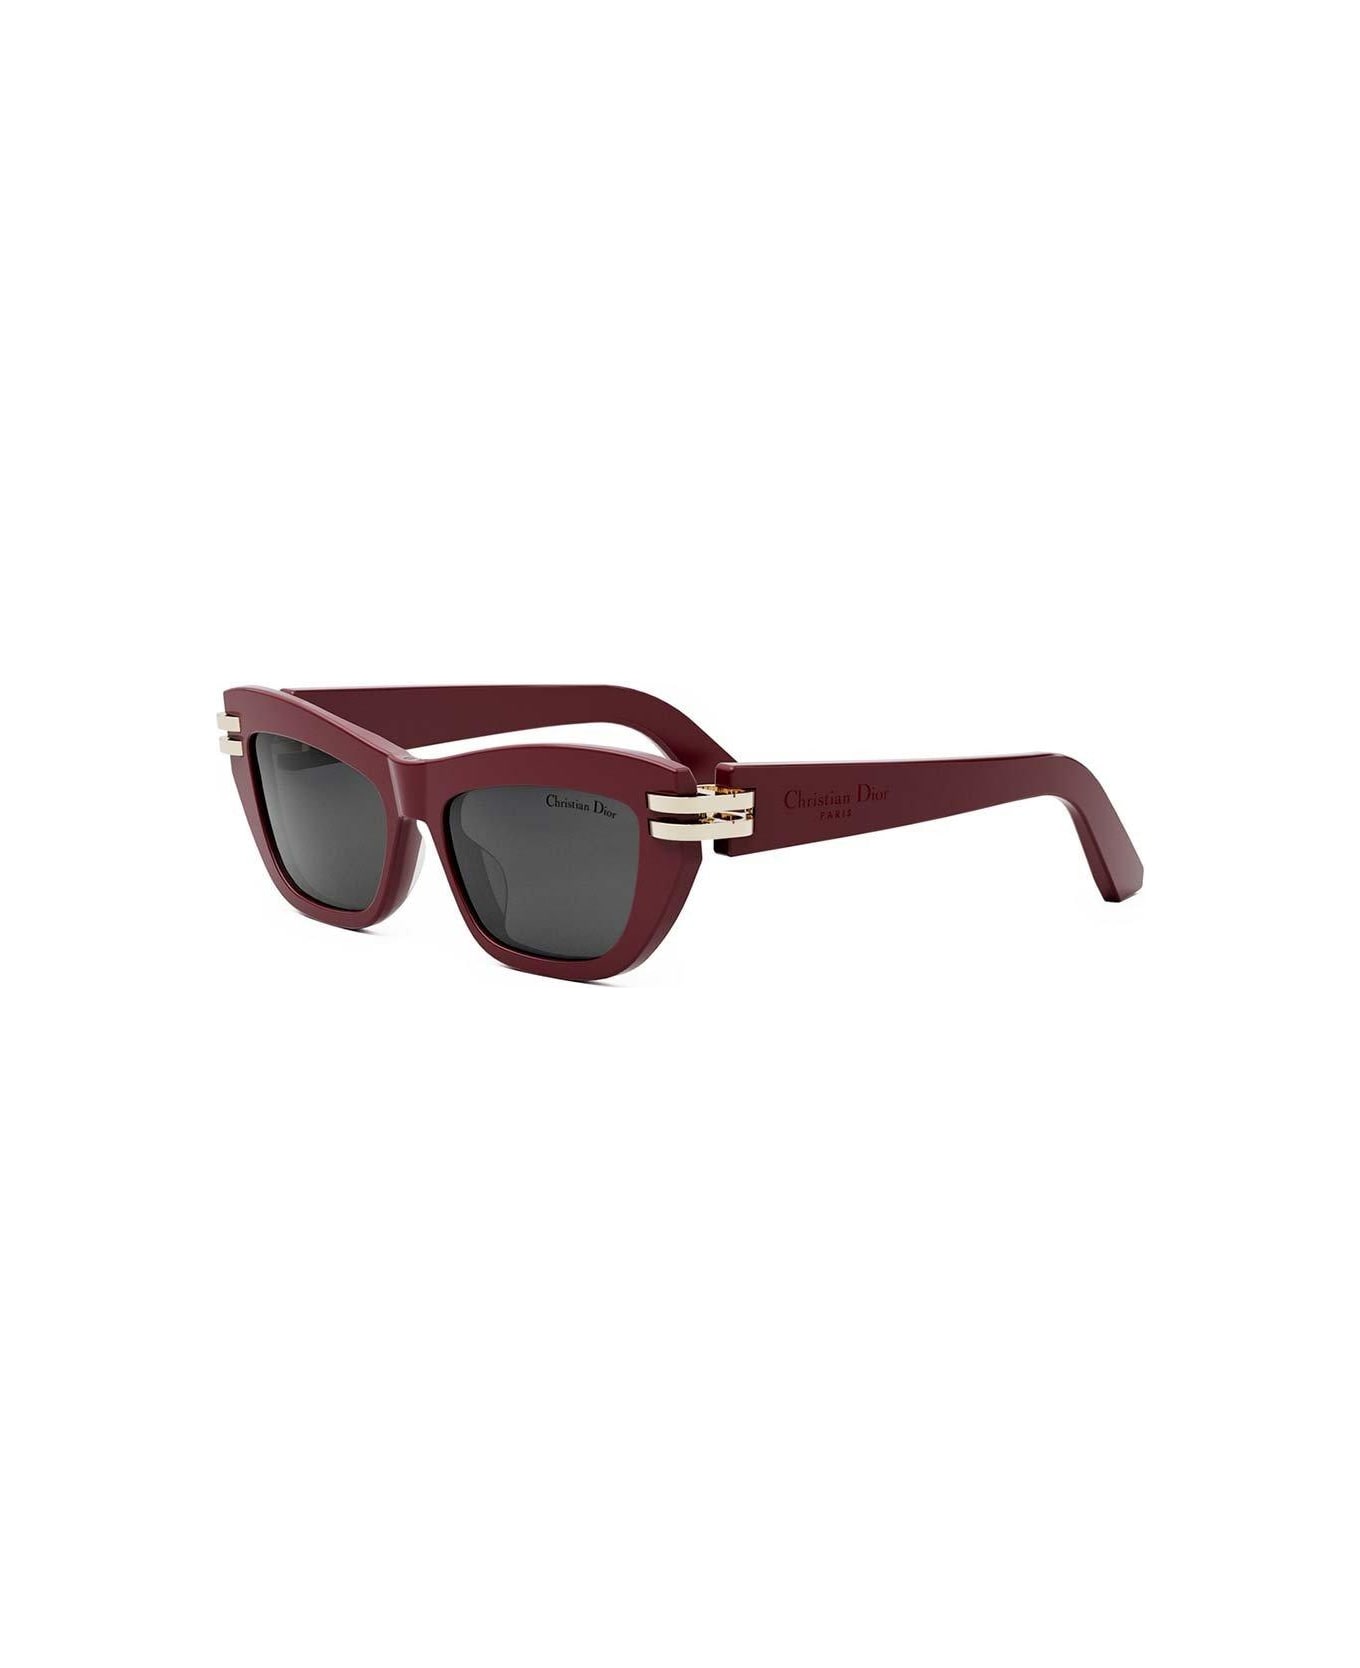 Dior Eyewear Butterfly Frame Sunglasses - 35a0 サングラス